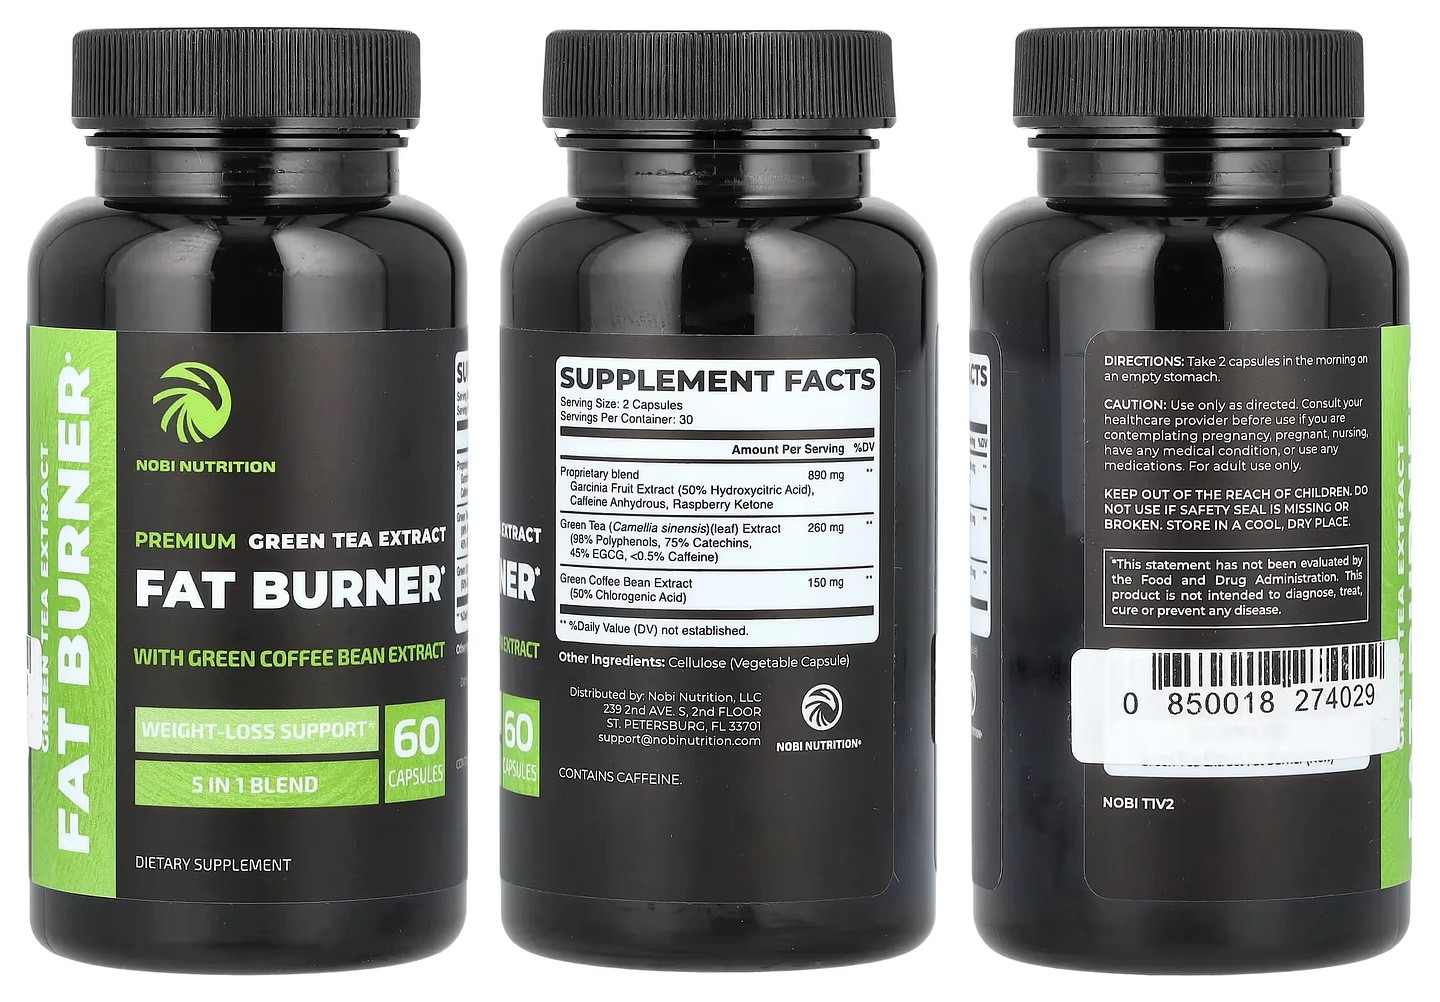 Nobi Nutrition, Premium Green Tea Extract Fat Burner packaging